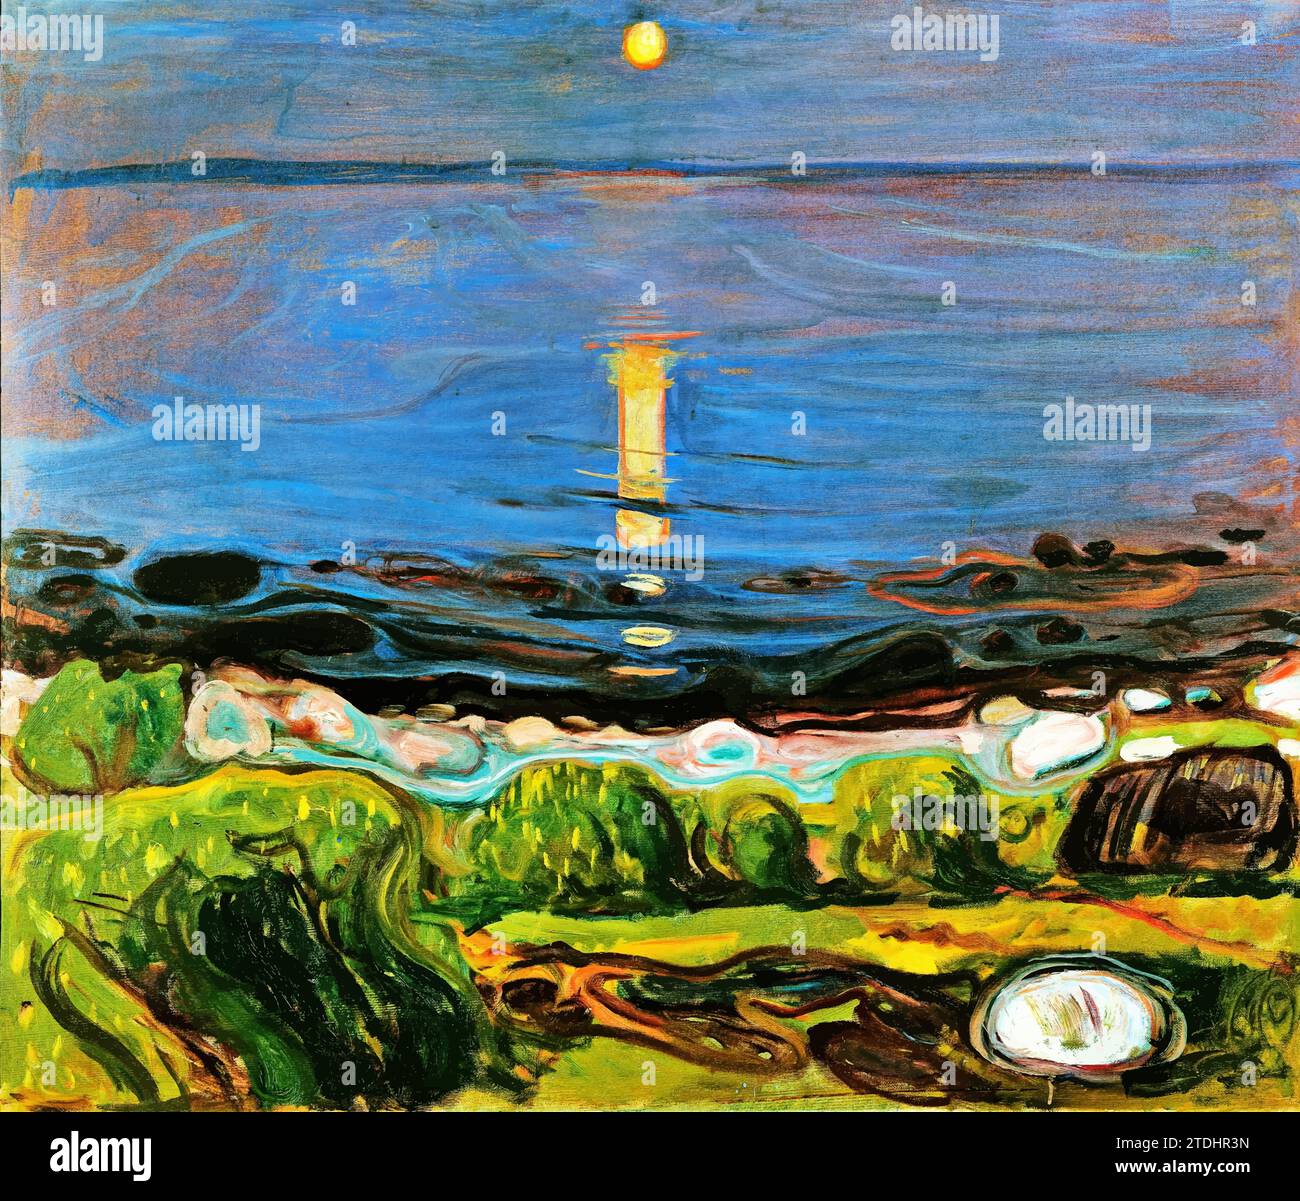 Summer Night by the Beach, 1902-03 (Painting) by Artist Munch, Edvard (1863-1944) / Norwegian. Stock Vector